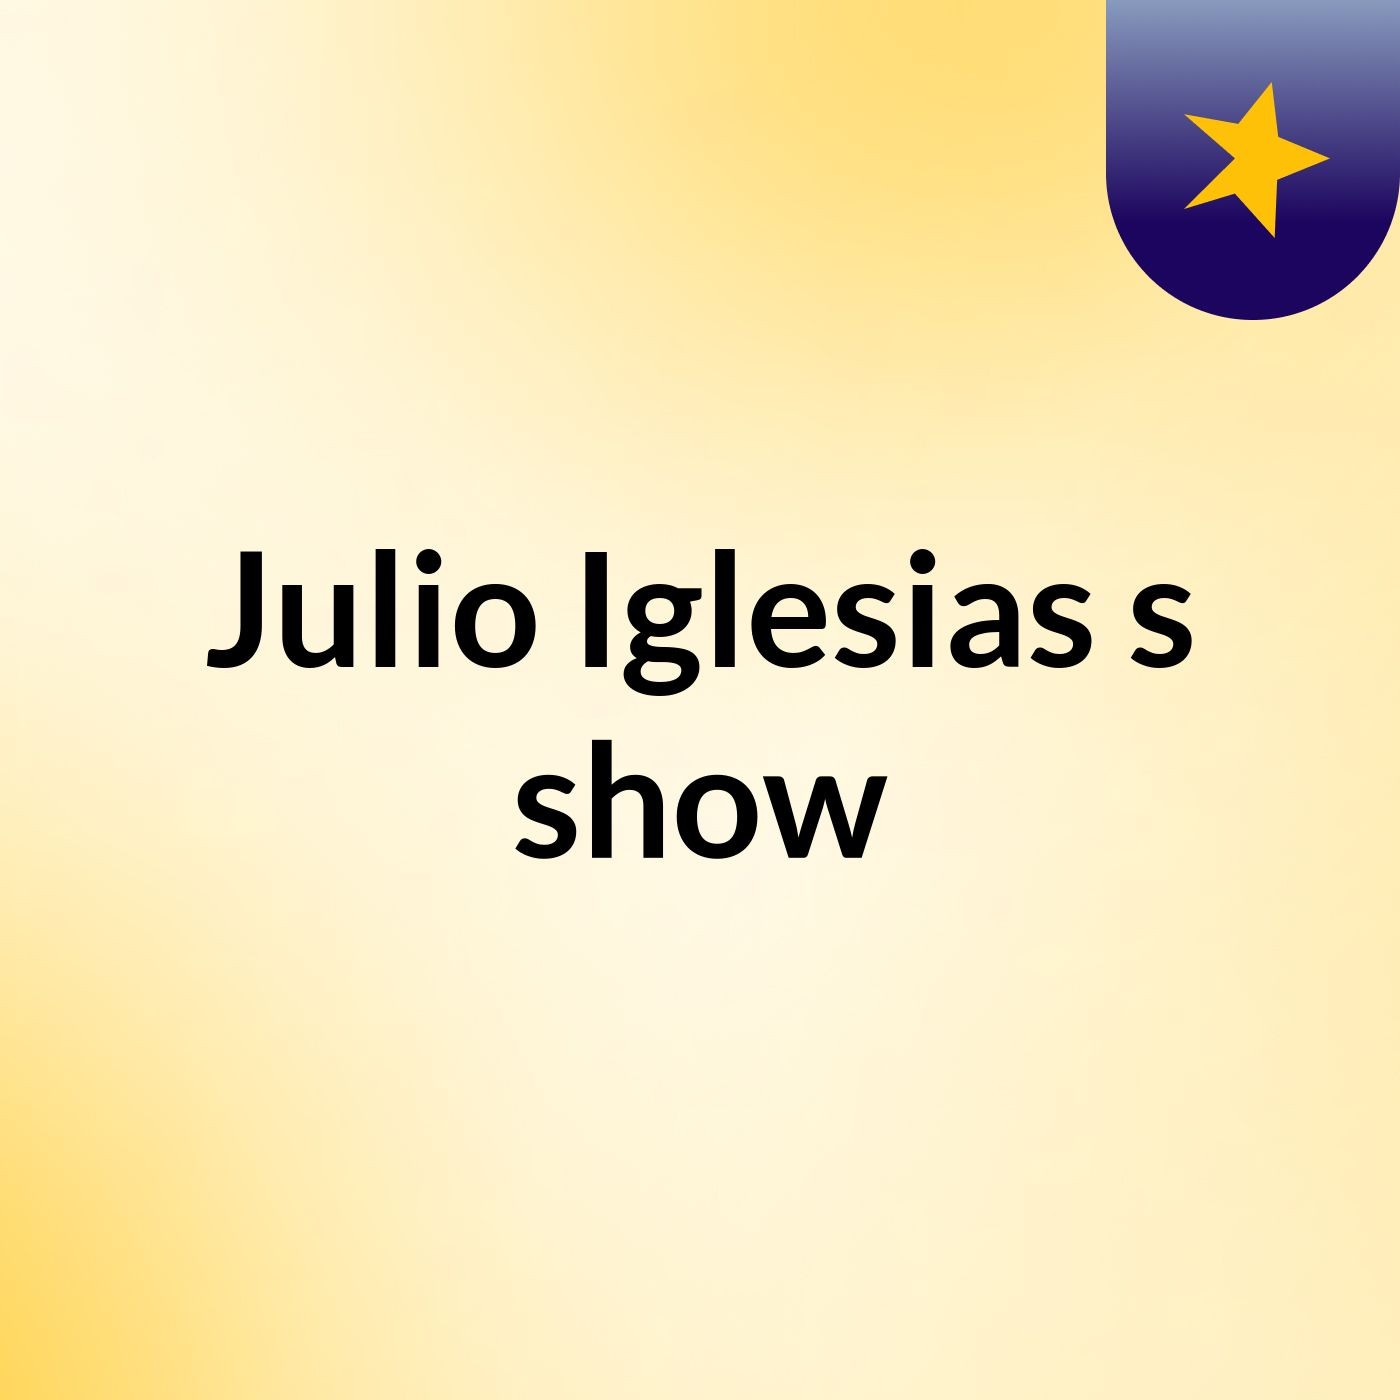 Julio Iglesias's show